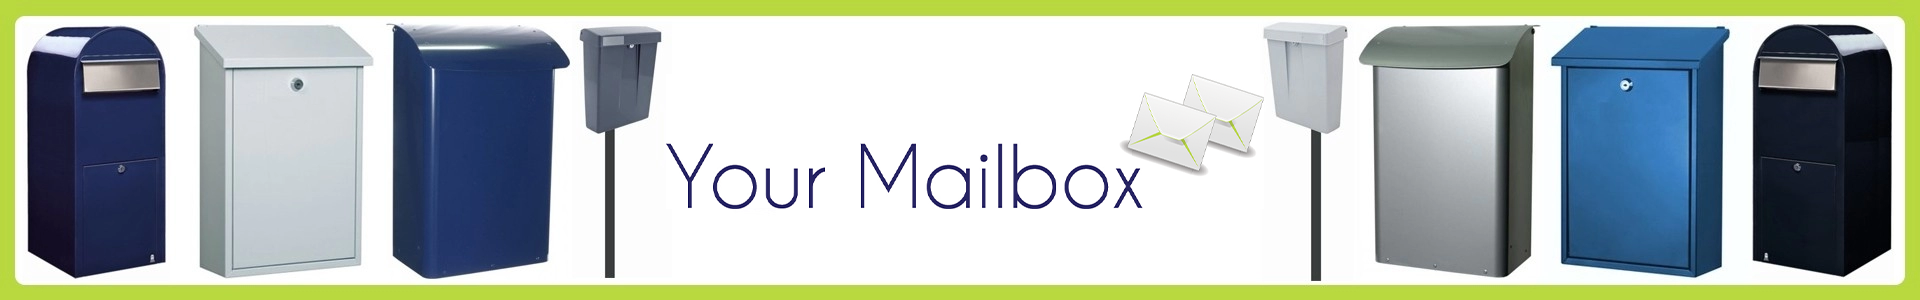 Banner yourmailbox